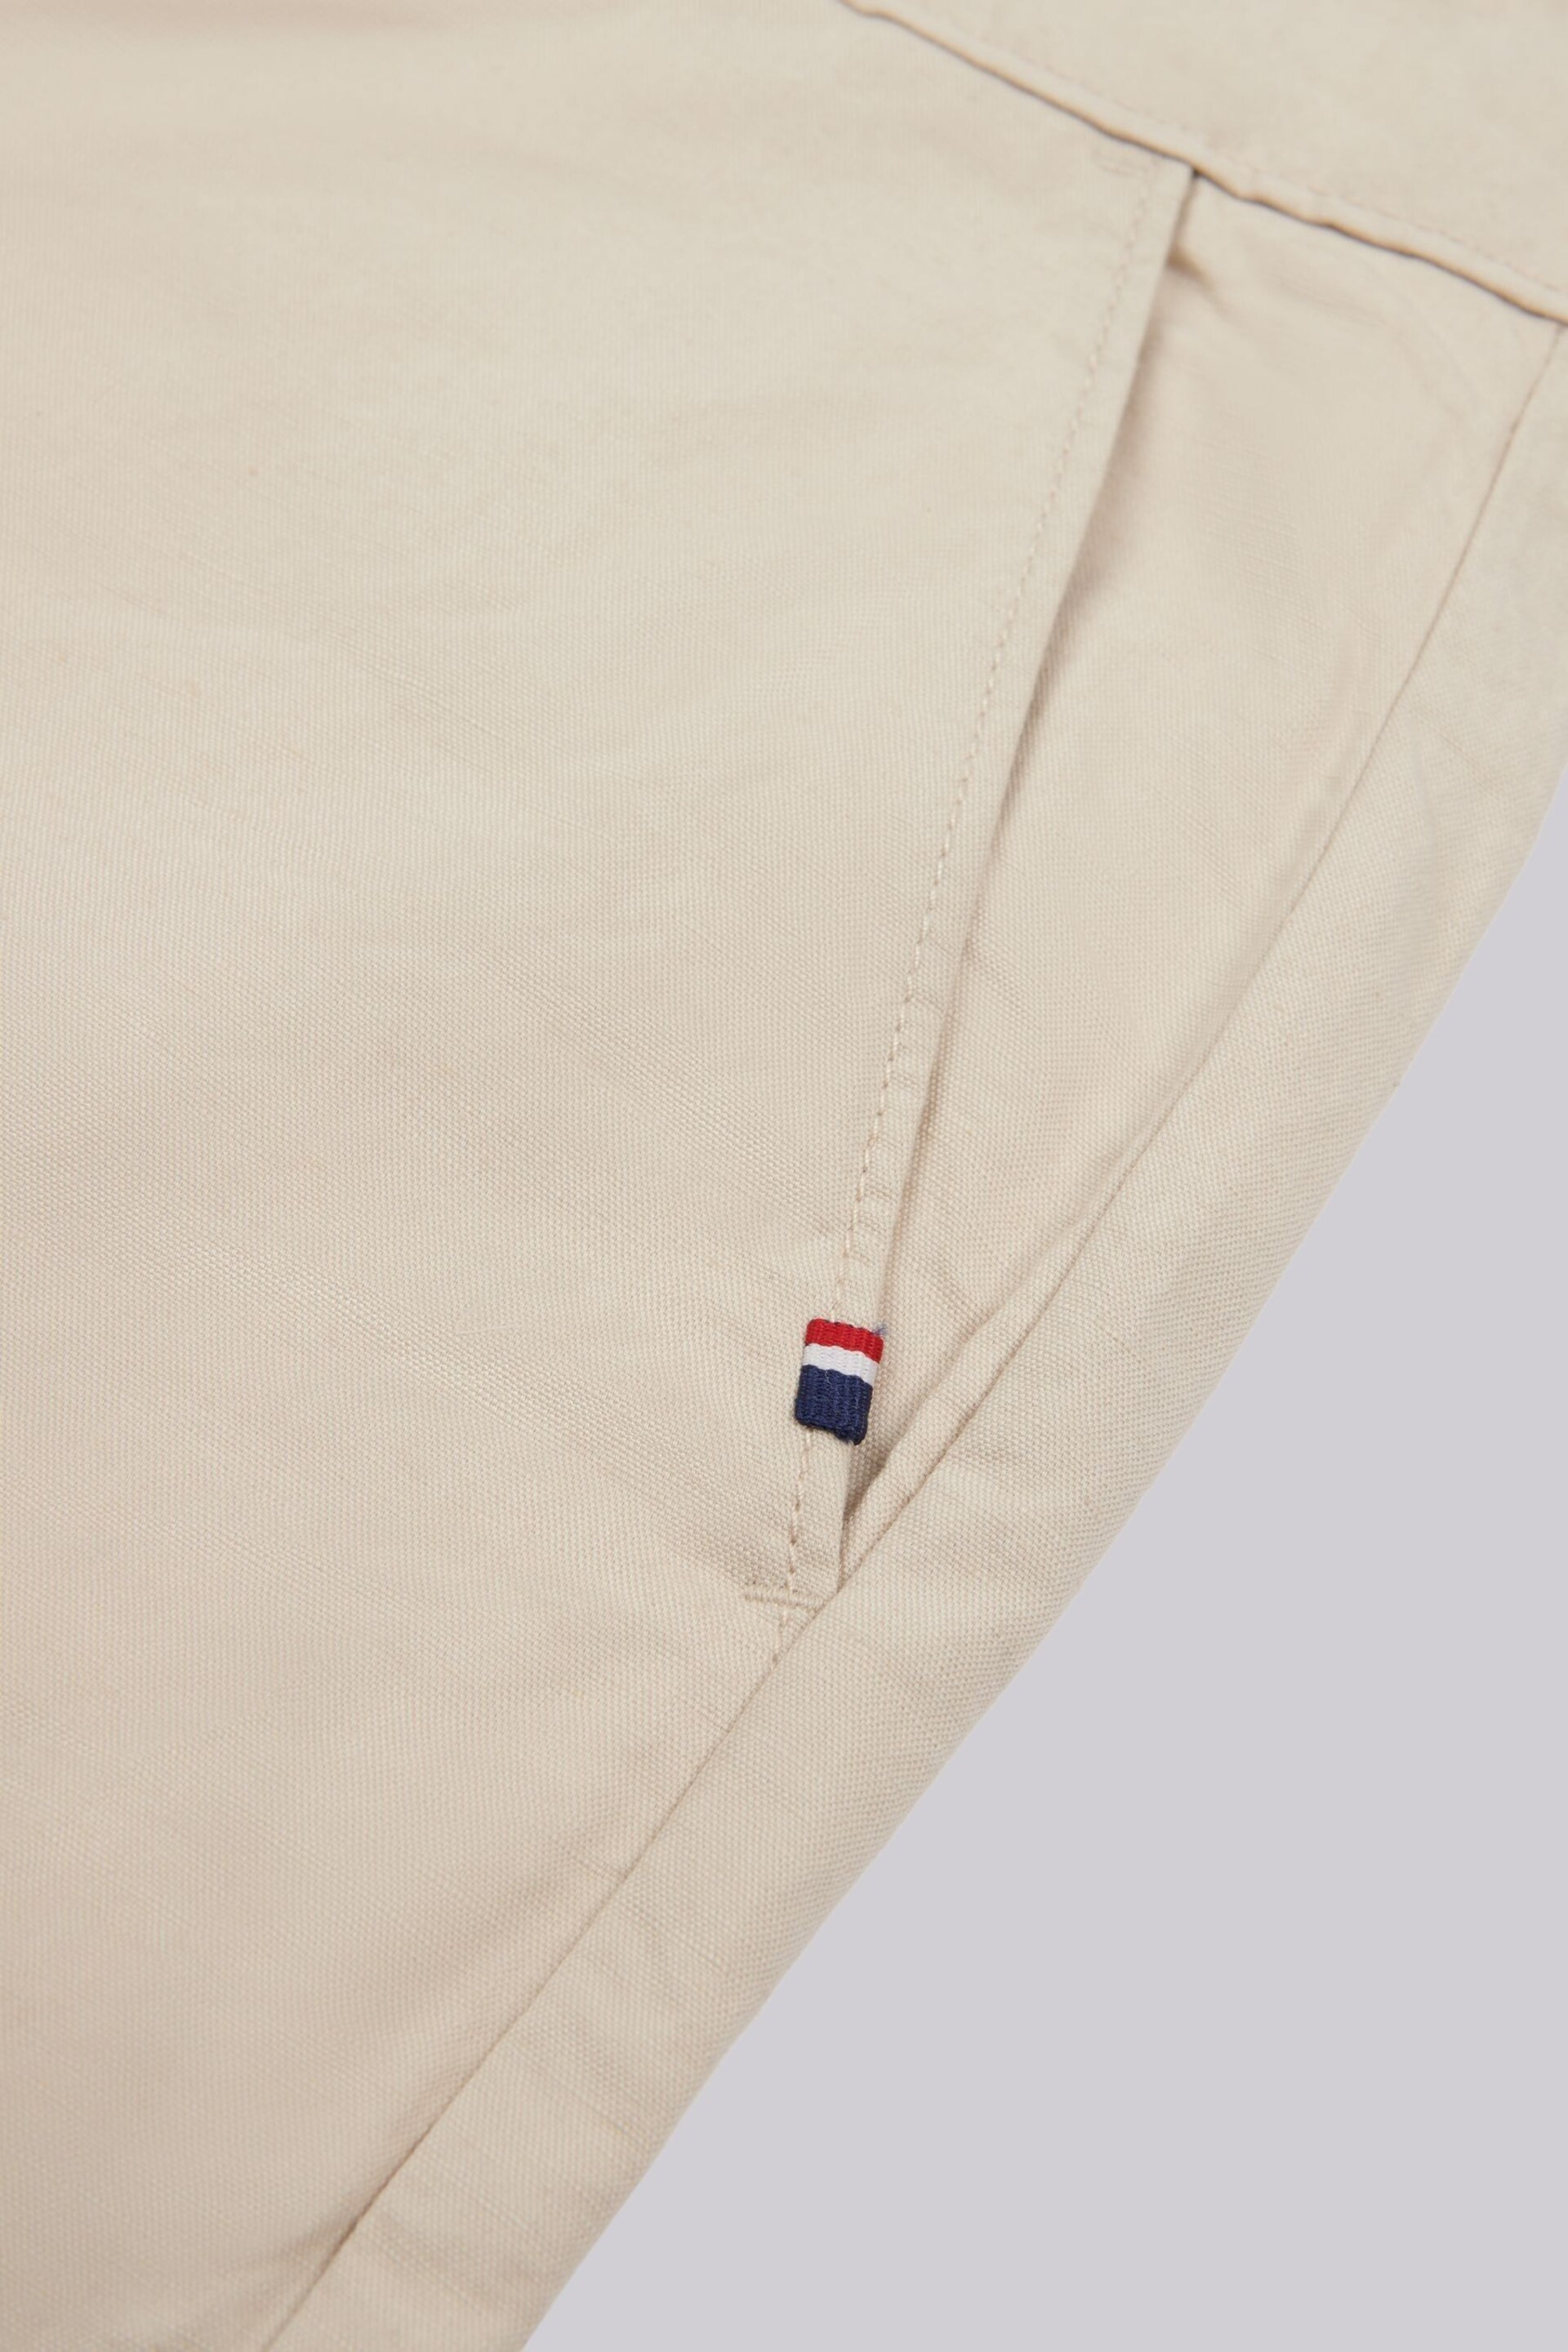 U.S. Polo Assn. Mens Linen Blend Chino Shorts - Image 8 of 9